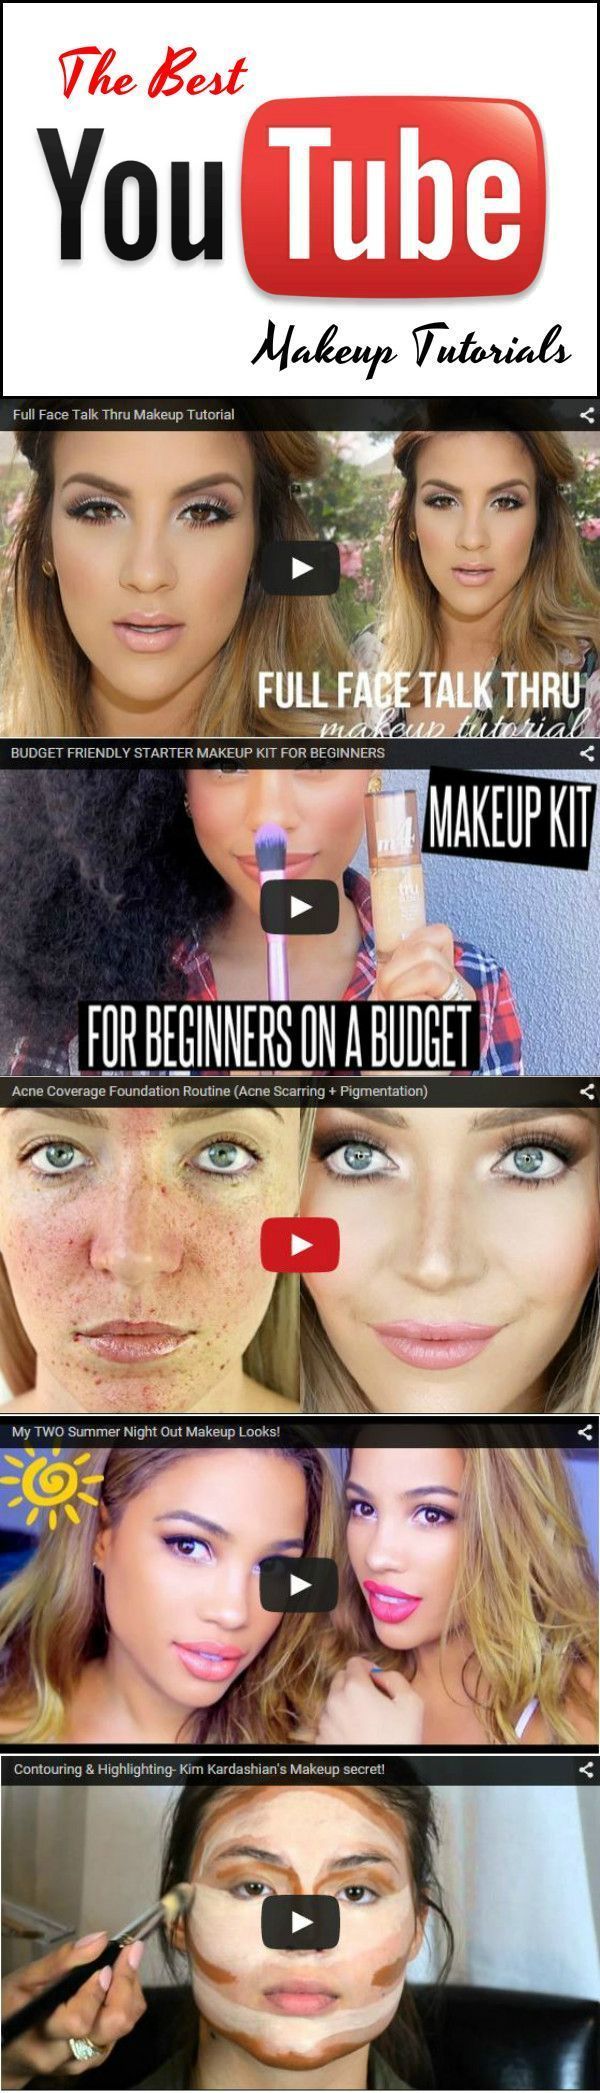 Makeup Artist Tricks For A Flawless Look at makeuptutorials.c......